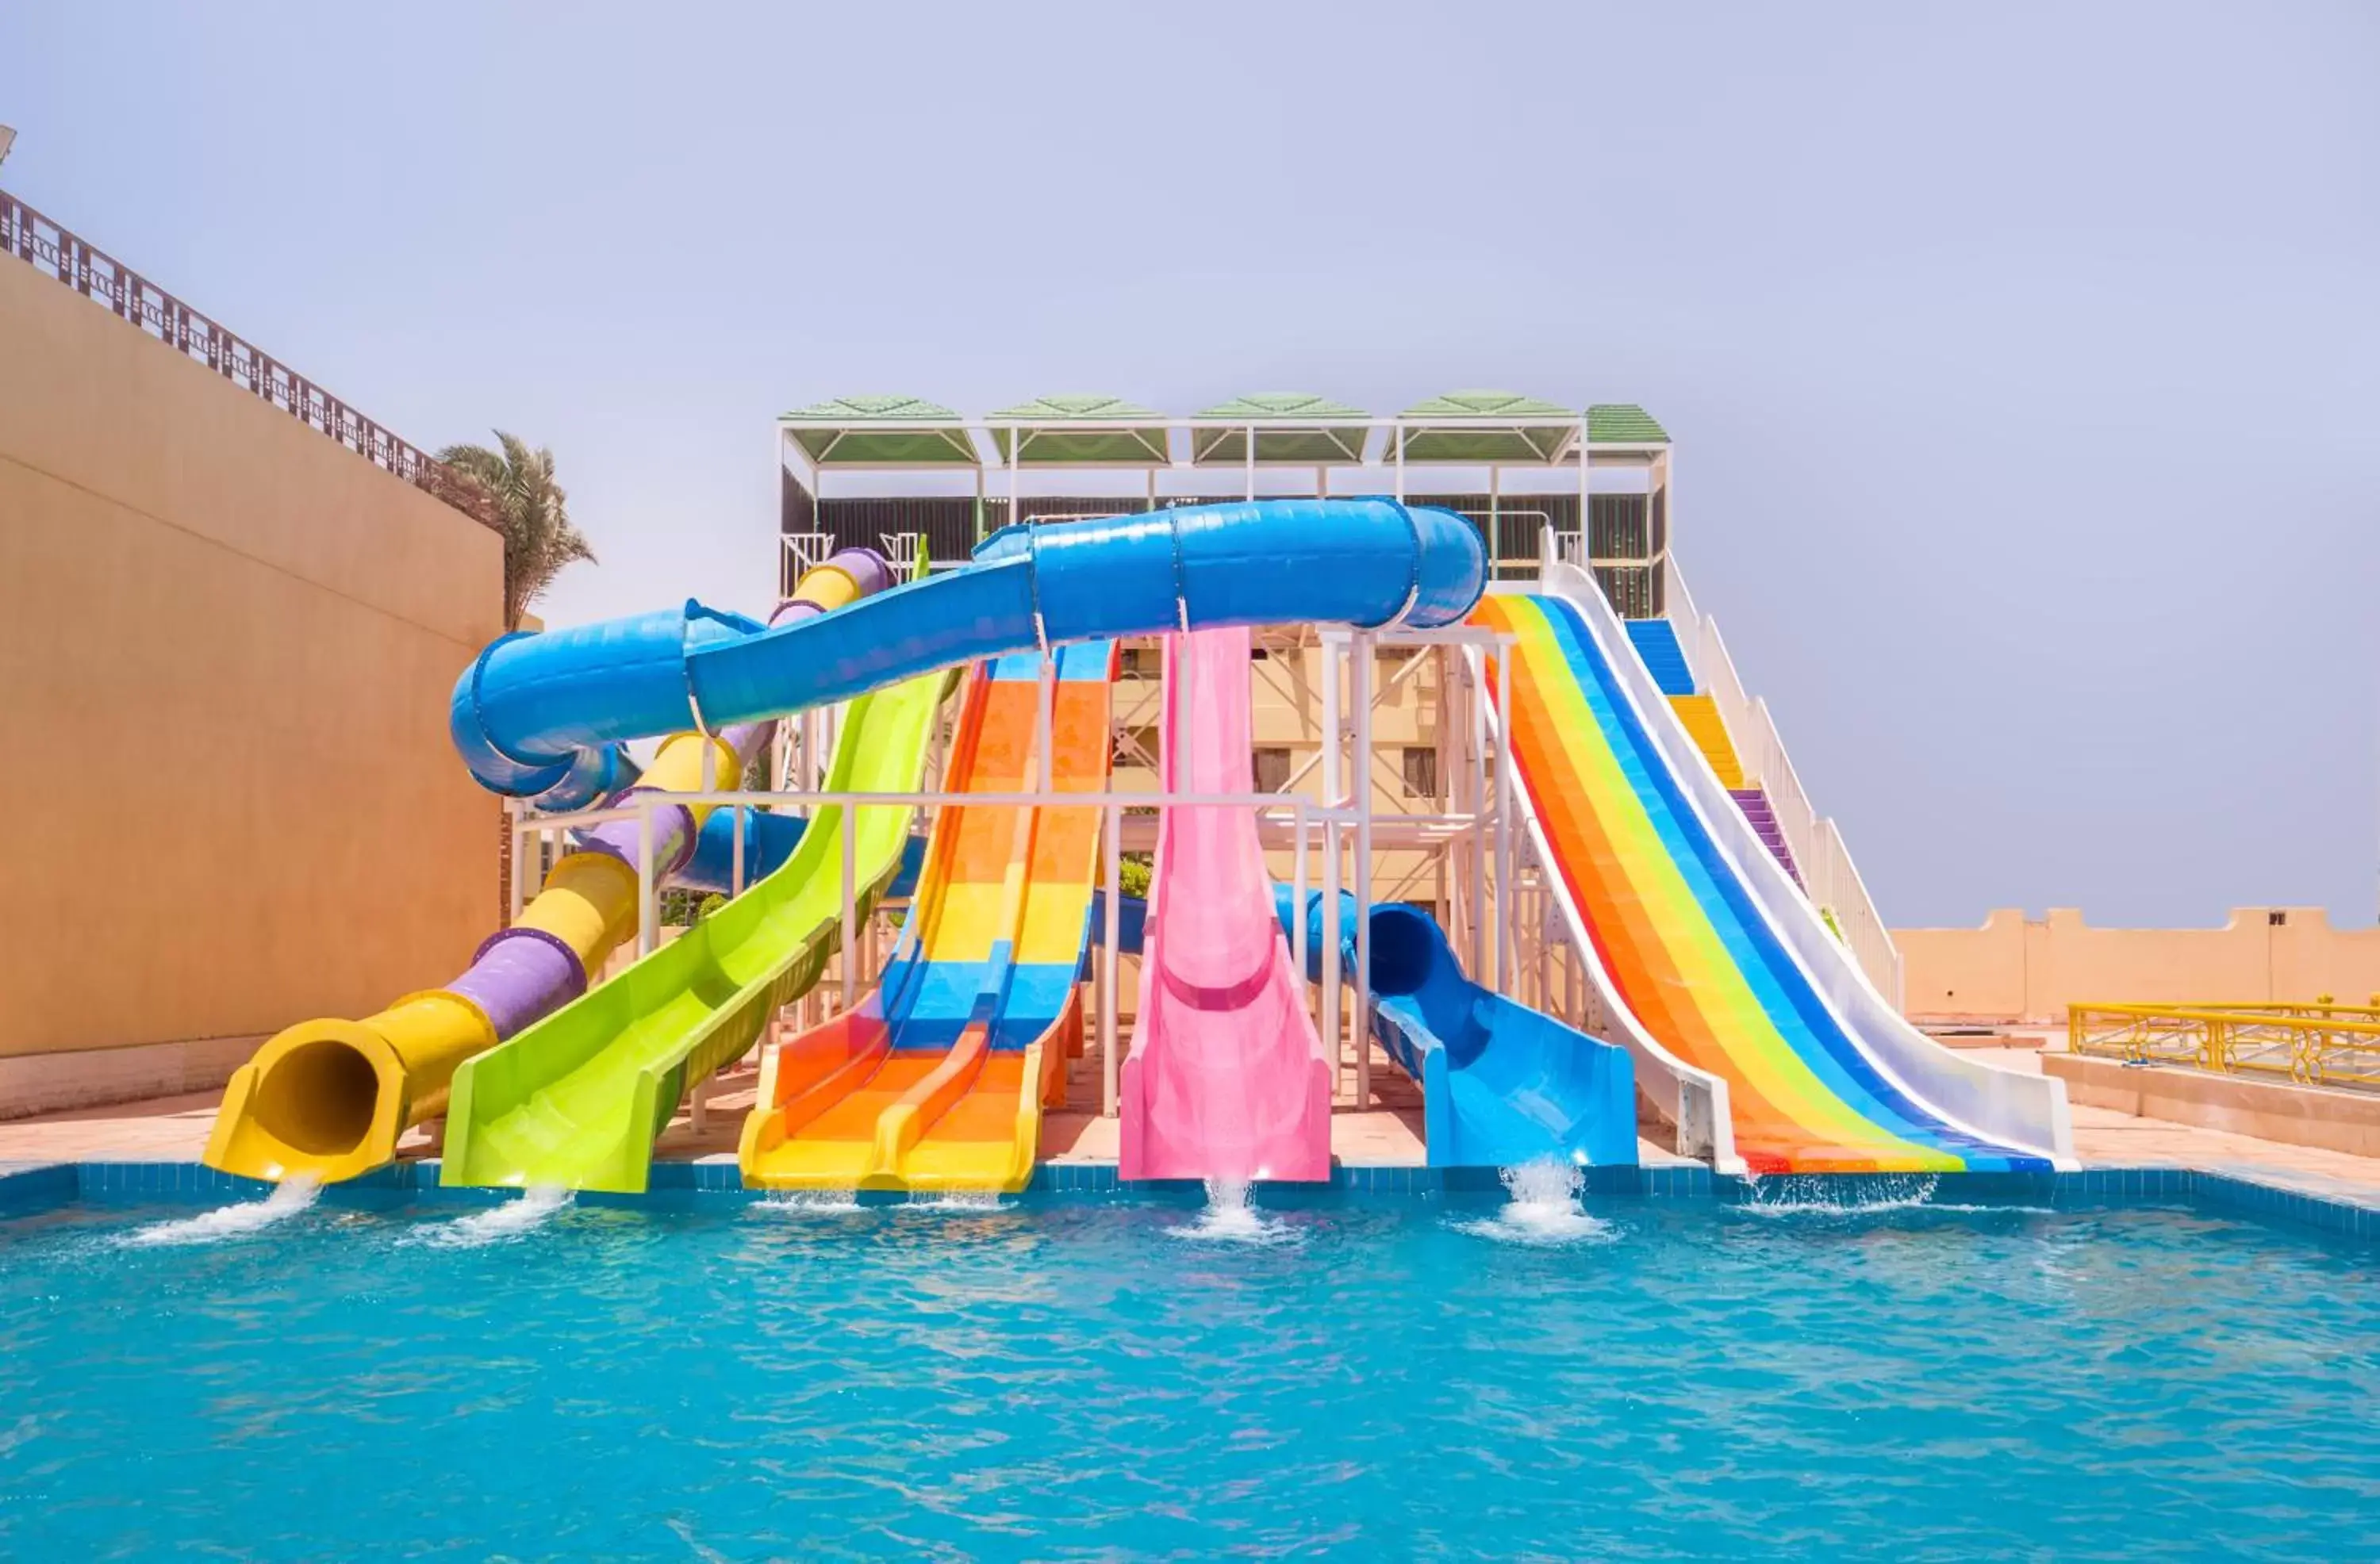 Aqua park, Water Park in Sunny Days Mirette Family Resort